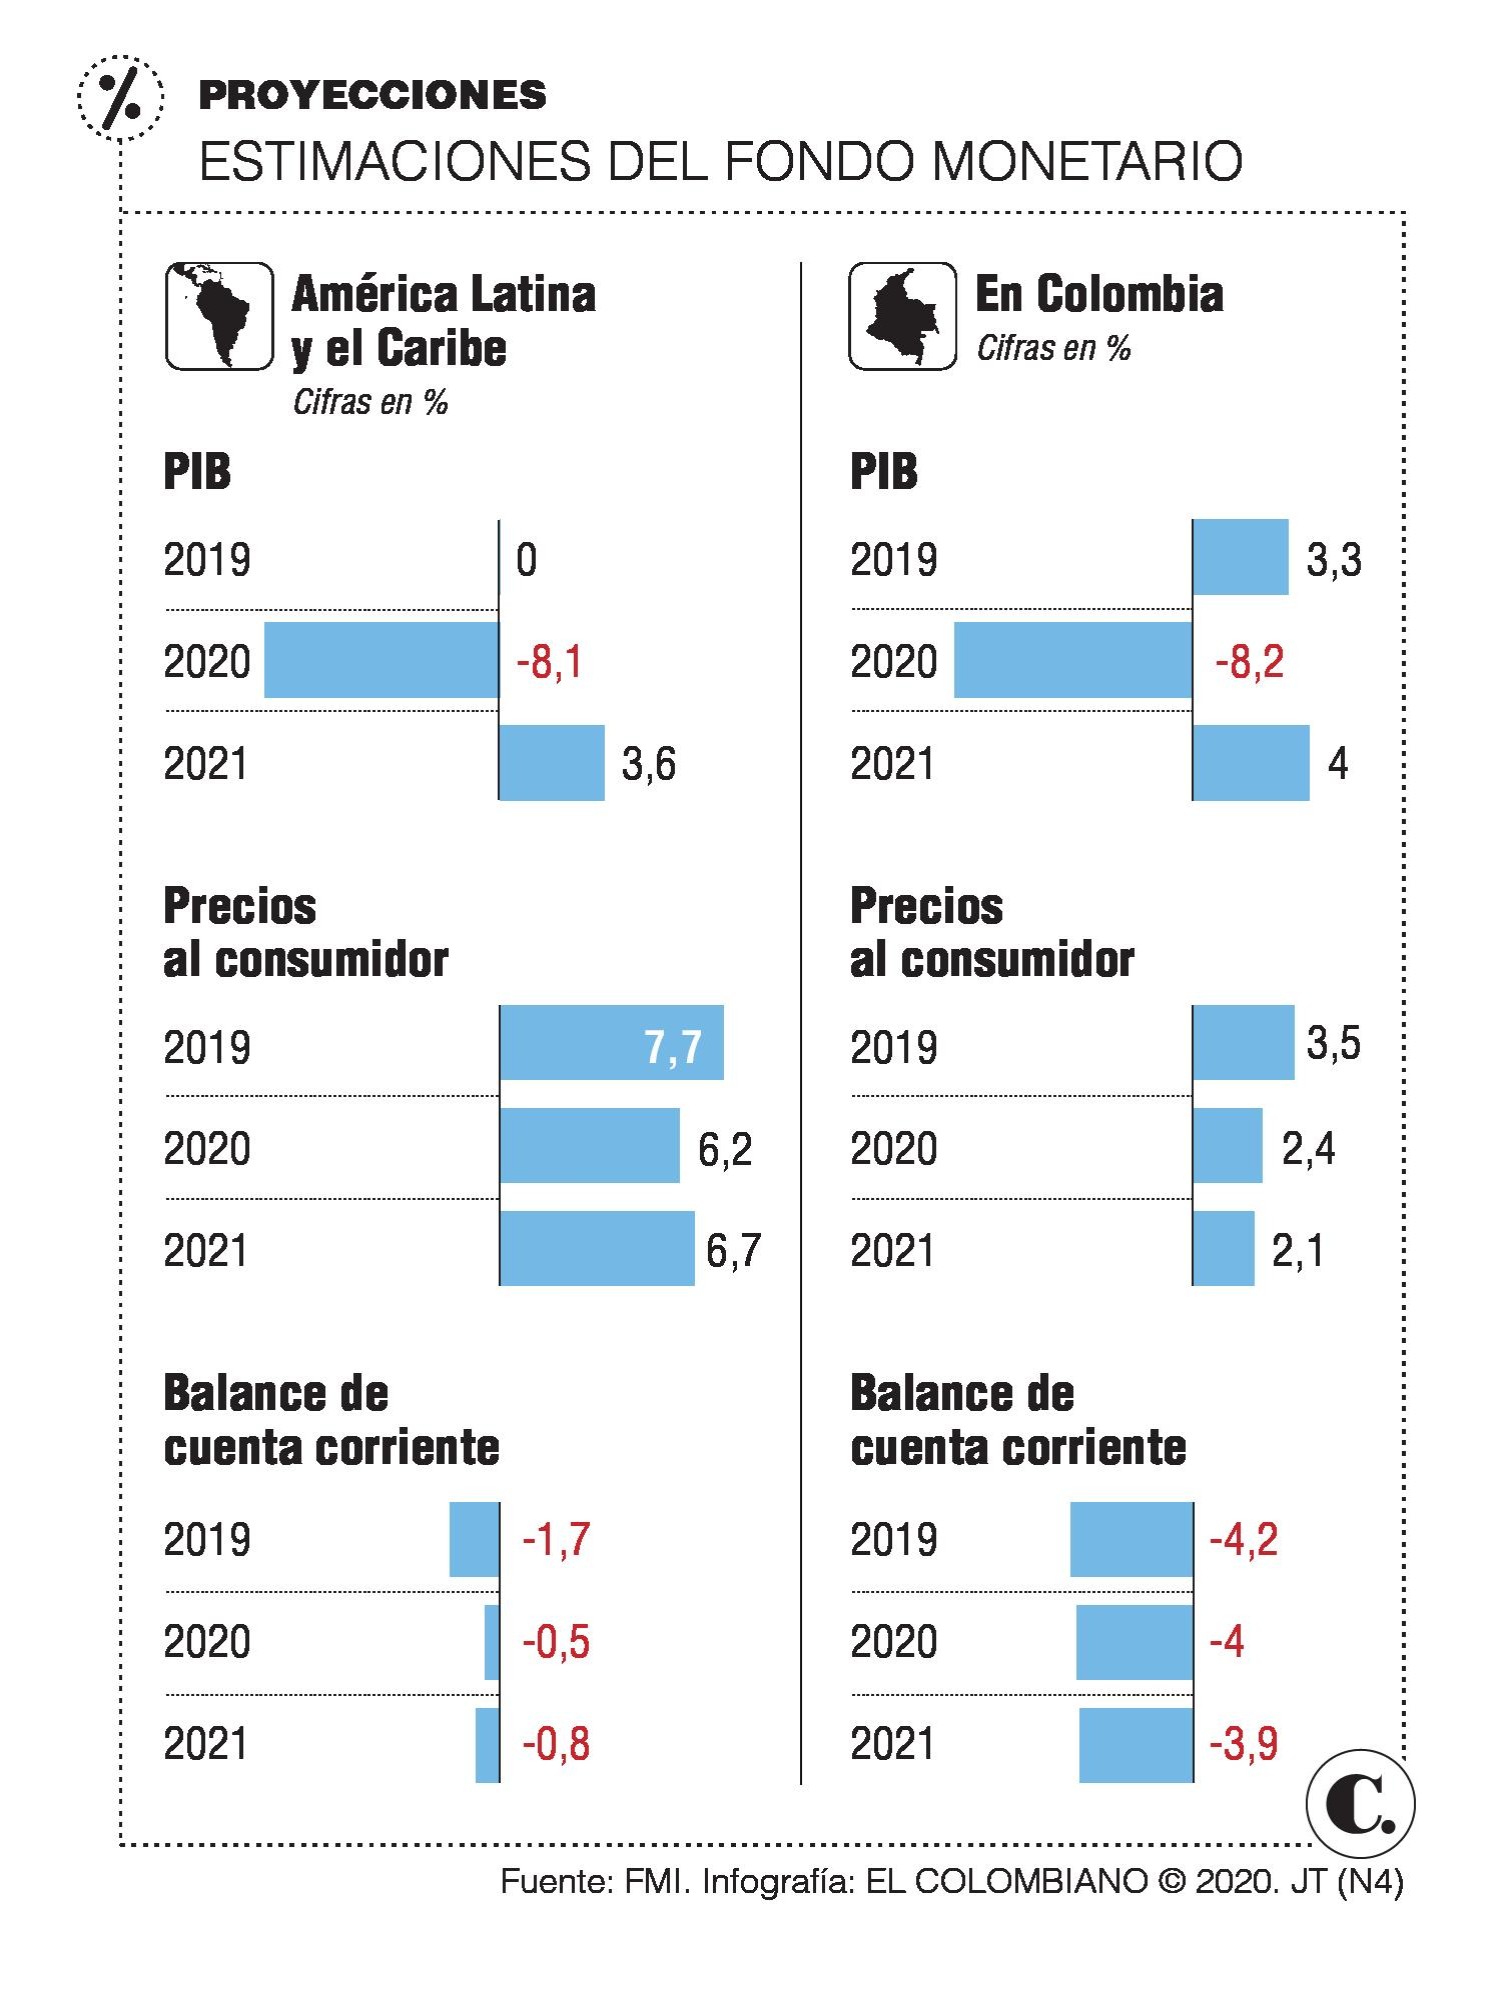 FMI es más optimista sobre América Latina